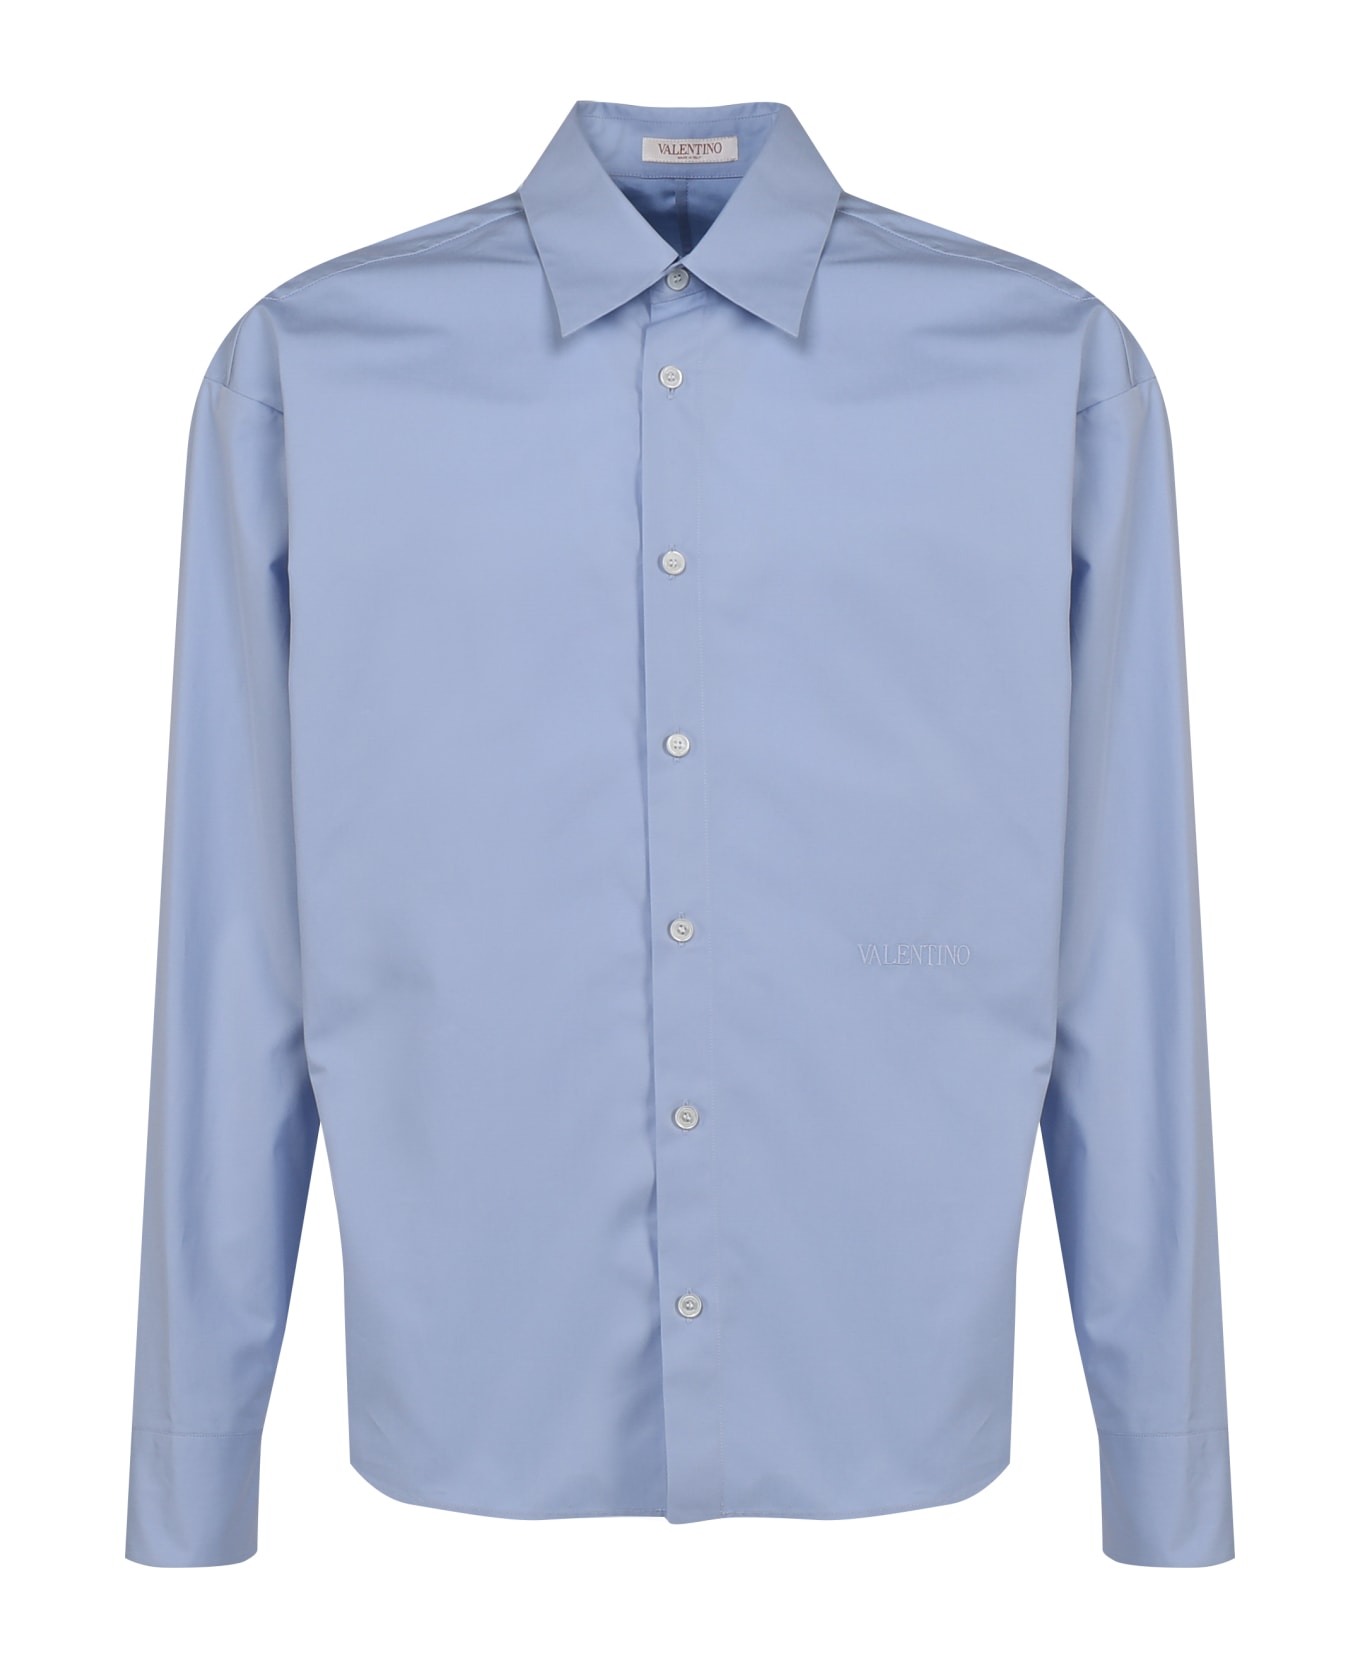 Valentino Garavani Cotton Shirt With Italian Collar - Light blue シャツ